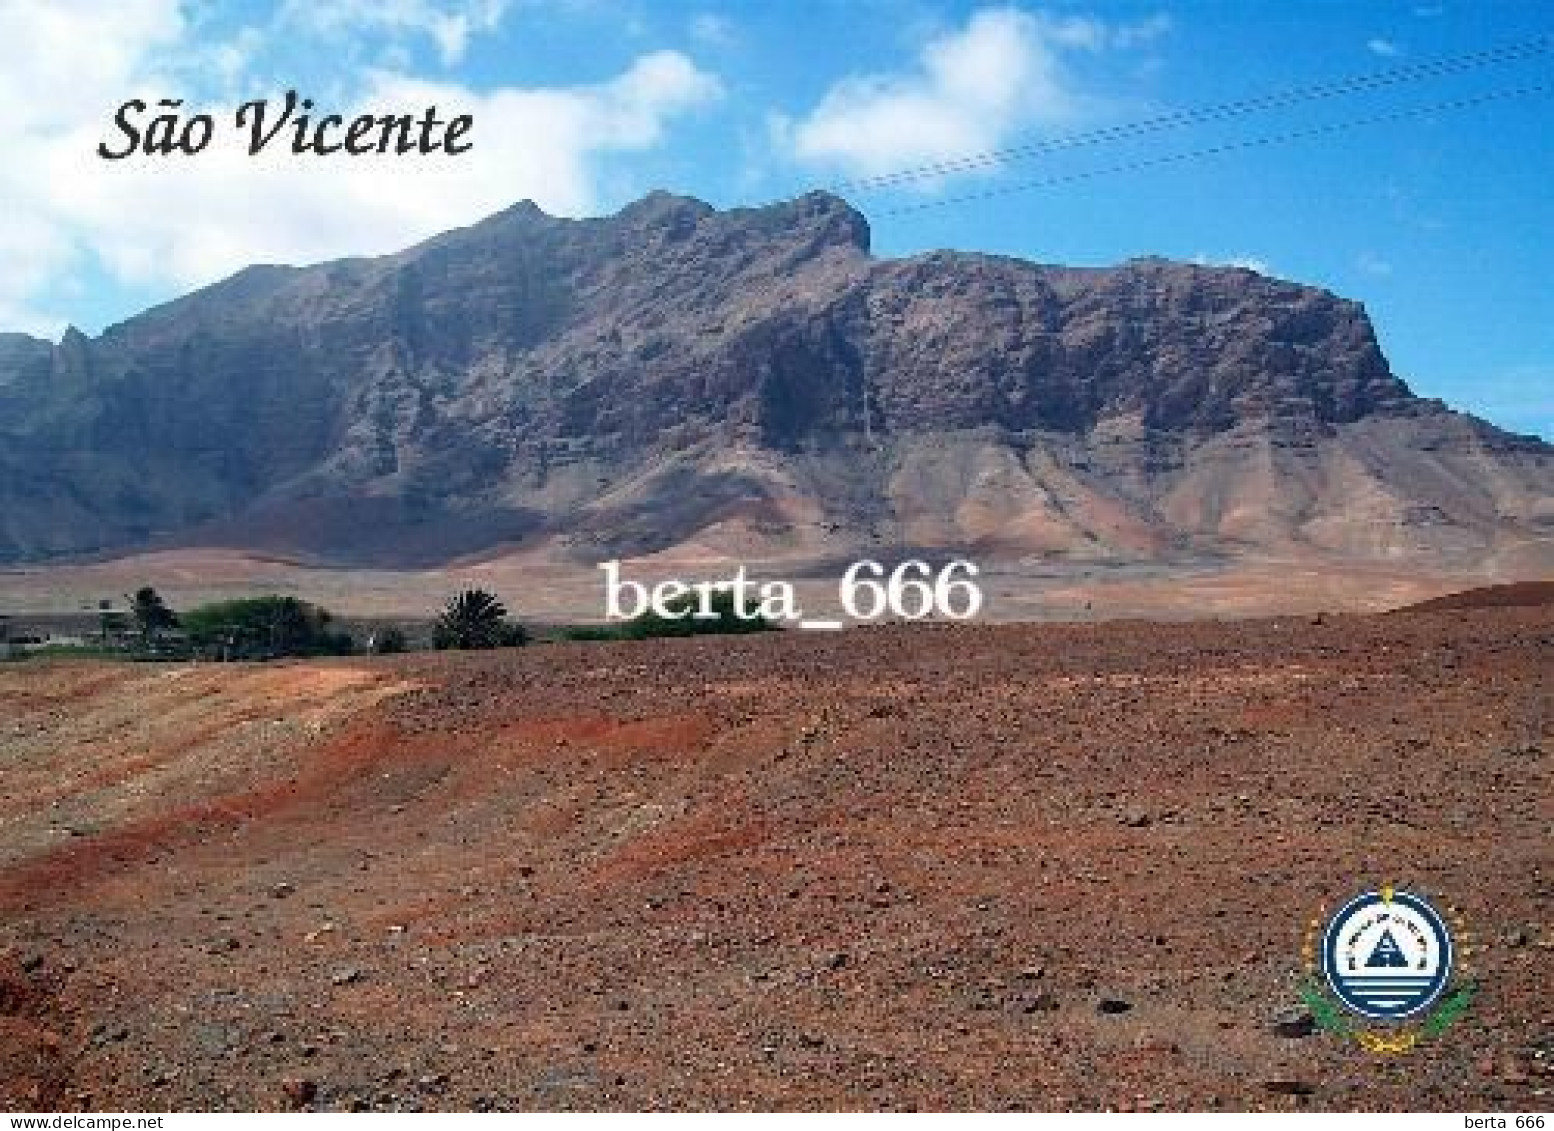 Cape Verde Sao Vicente Island New Postcard - Capo Verde